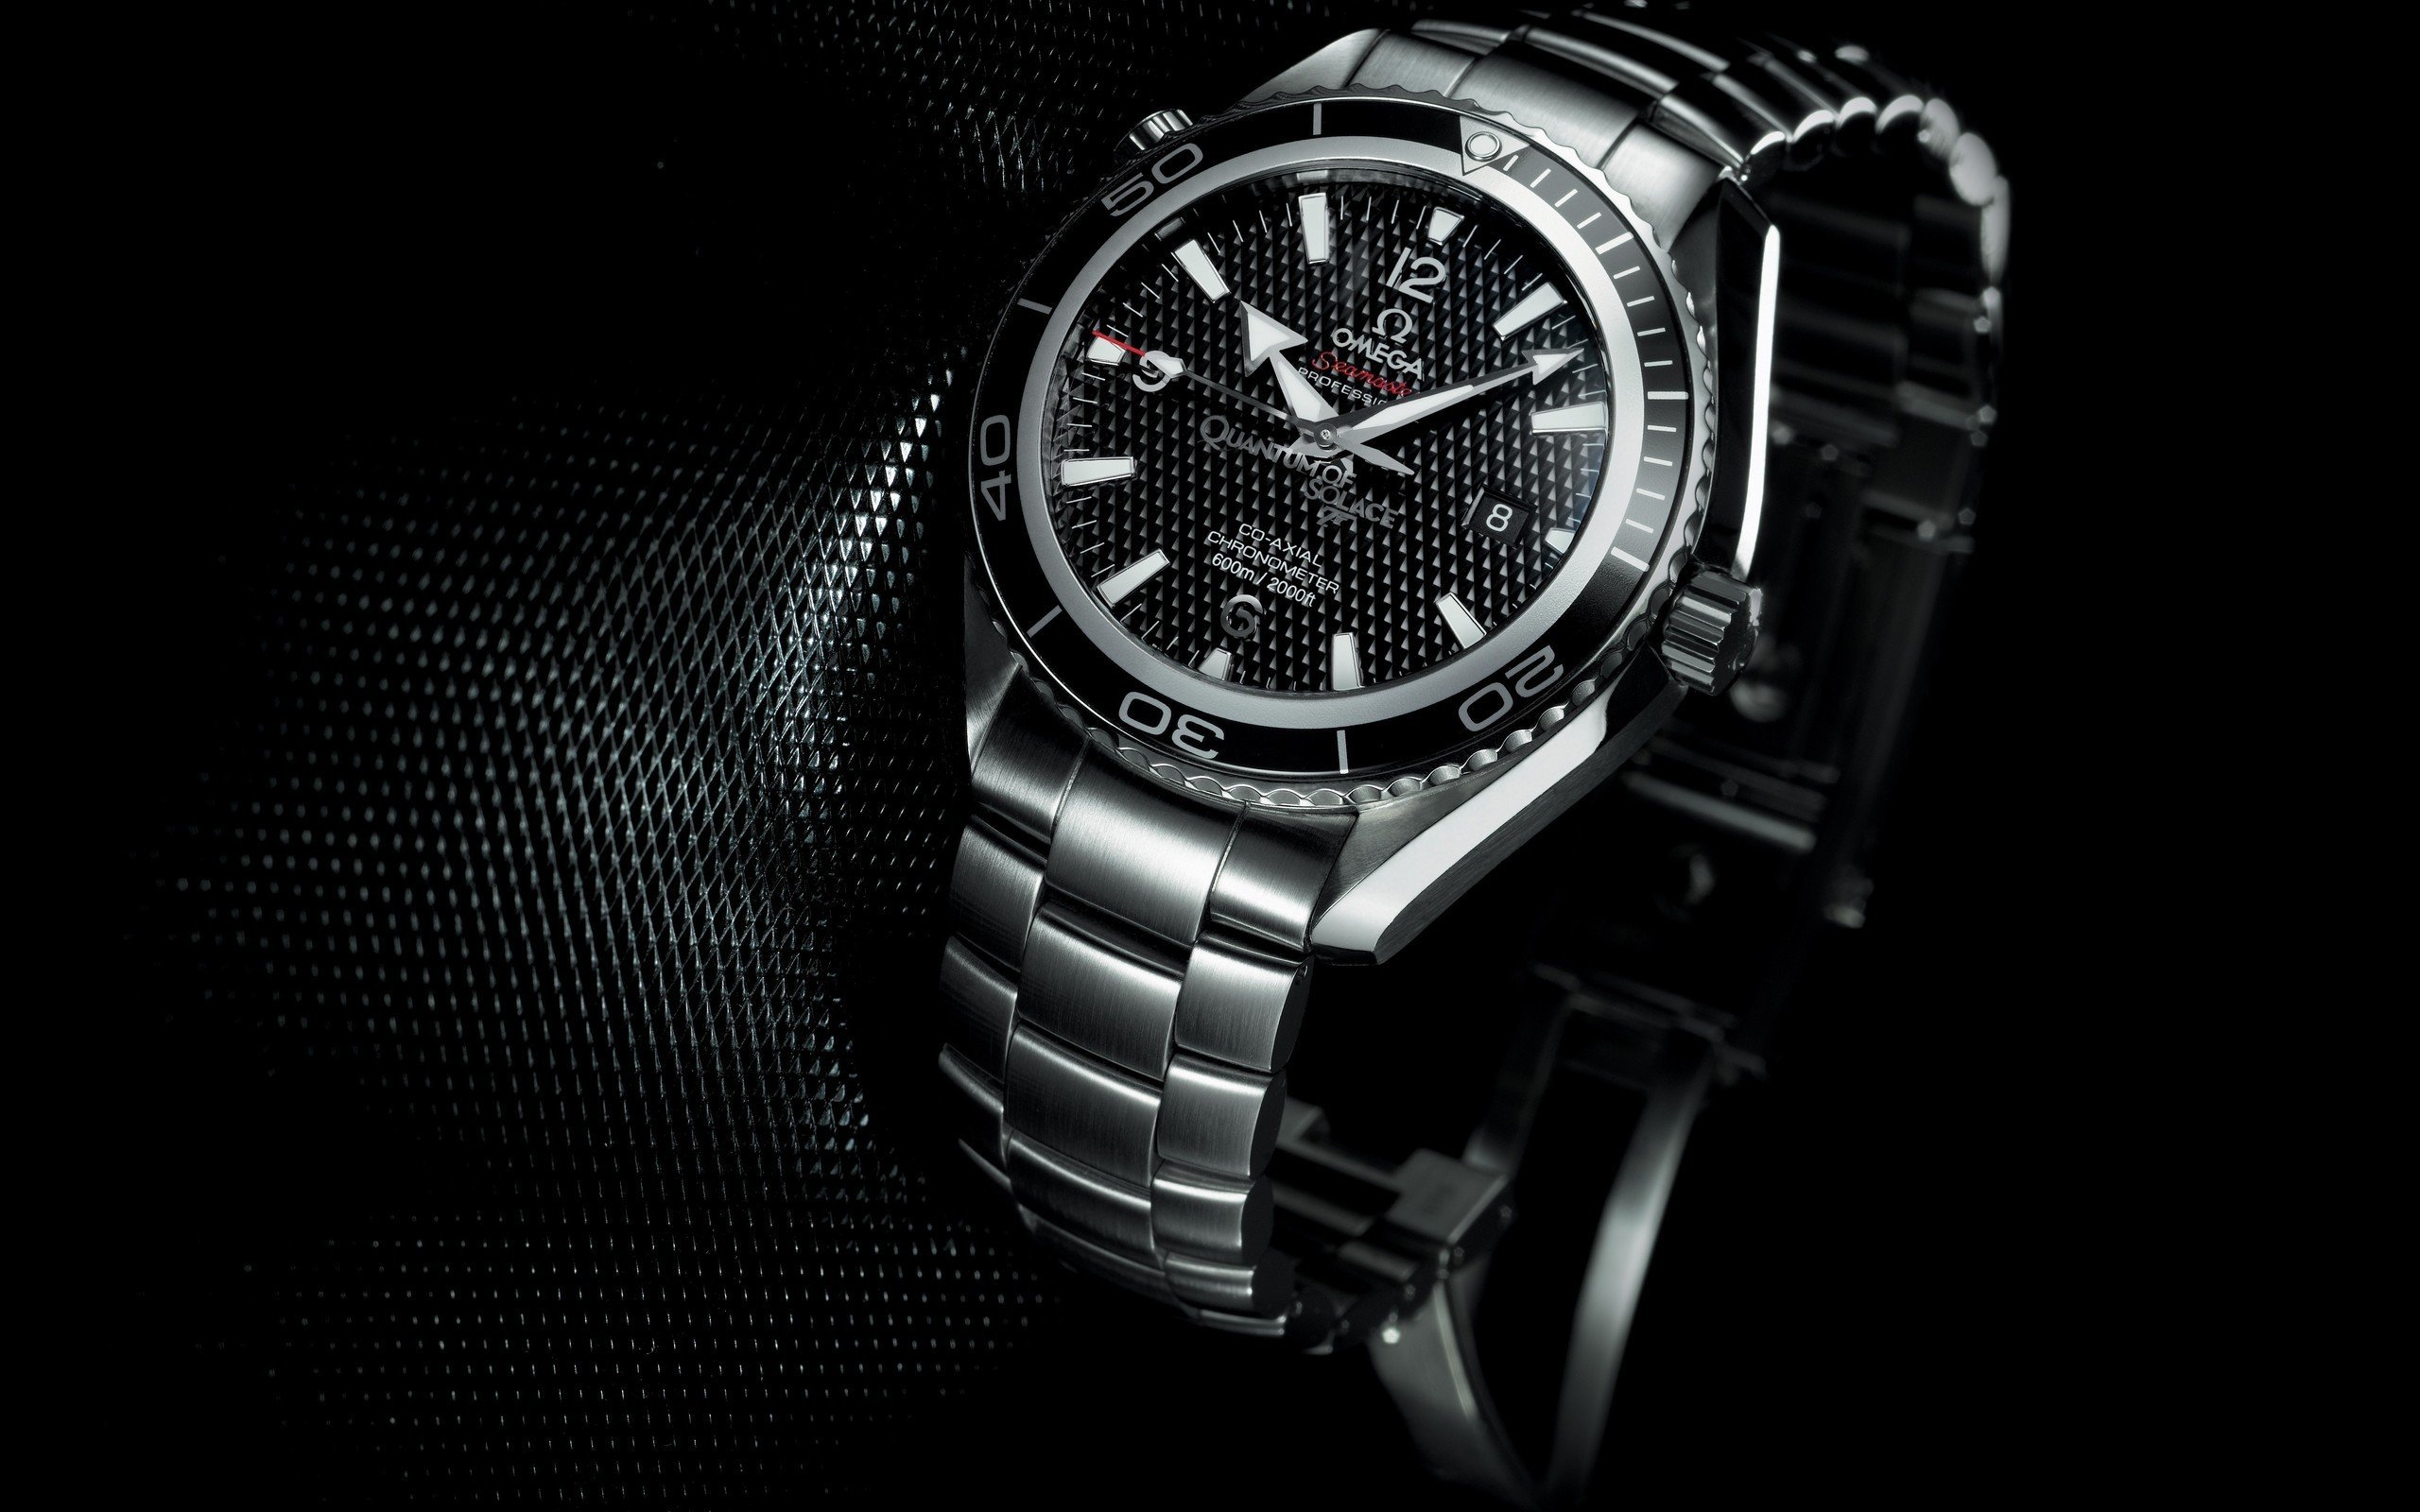 Wallpaper 2560x1600 px luxury watches watch 2560x1600 2560x1600